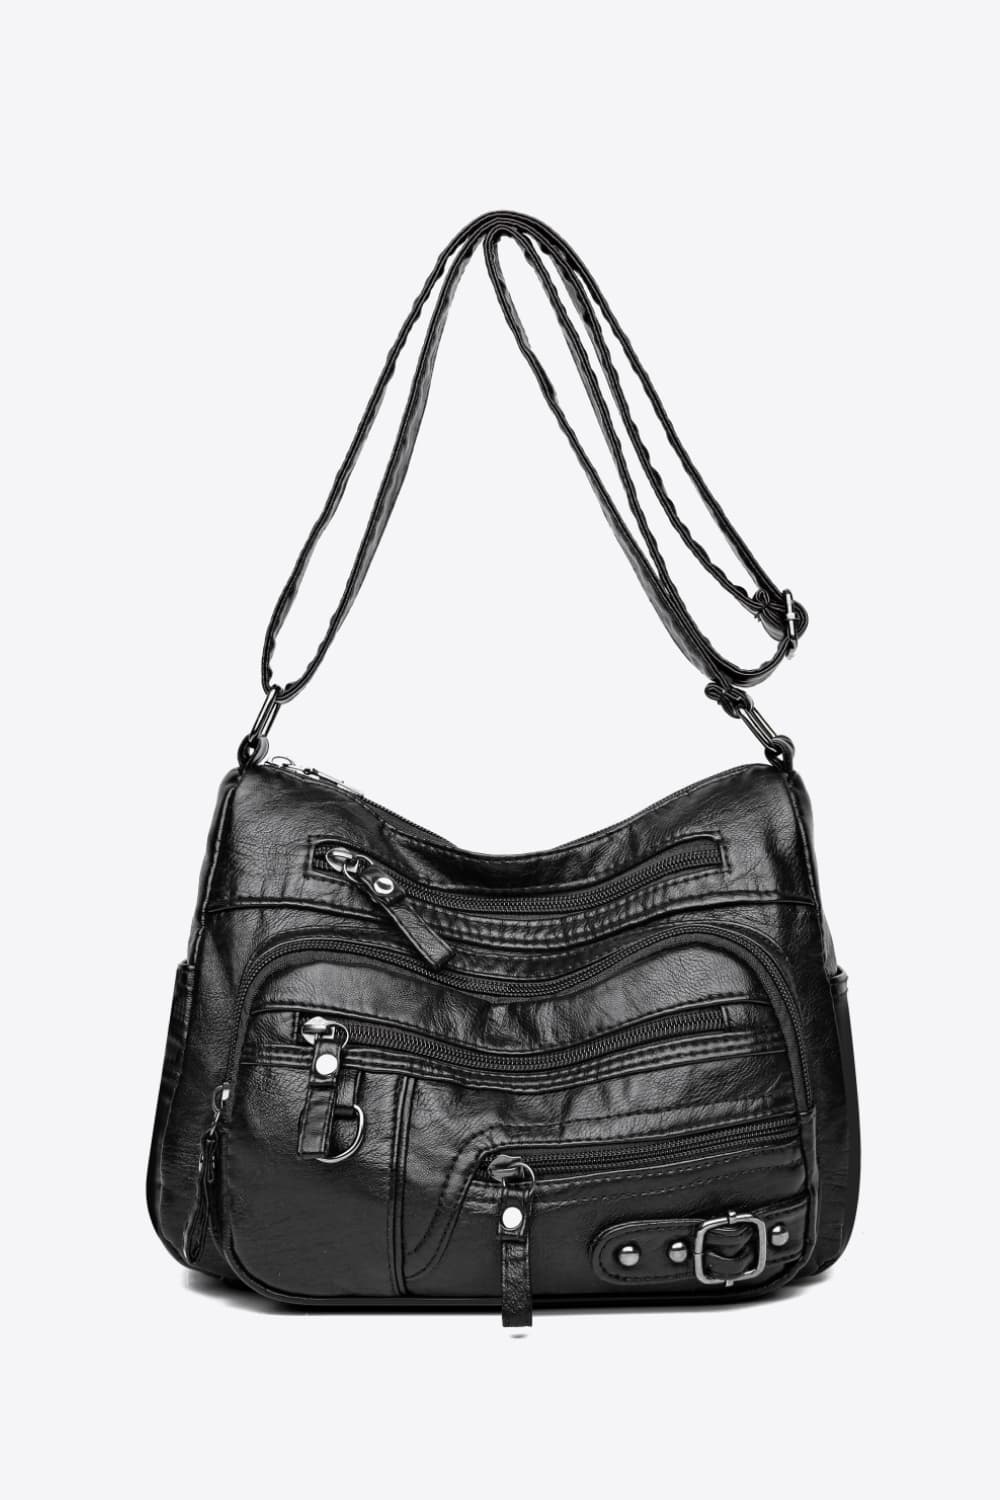 Multi-Pocket PU Leather Crossbody Bag Black One Size